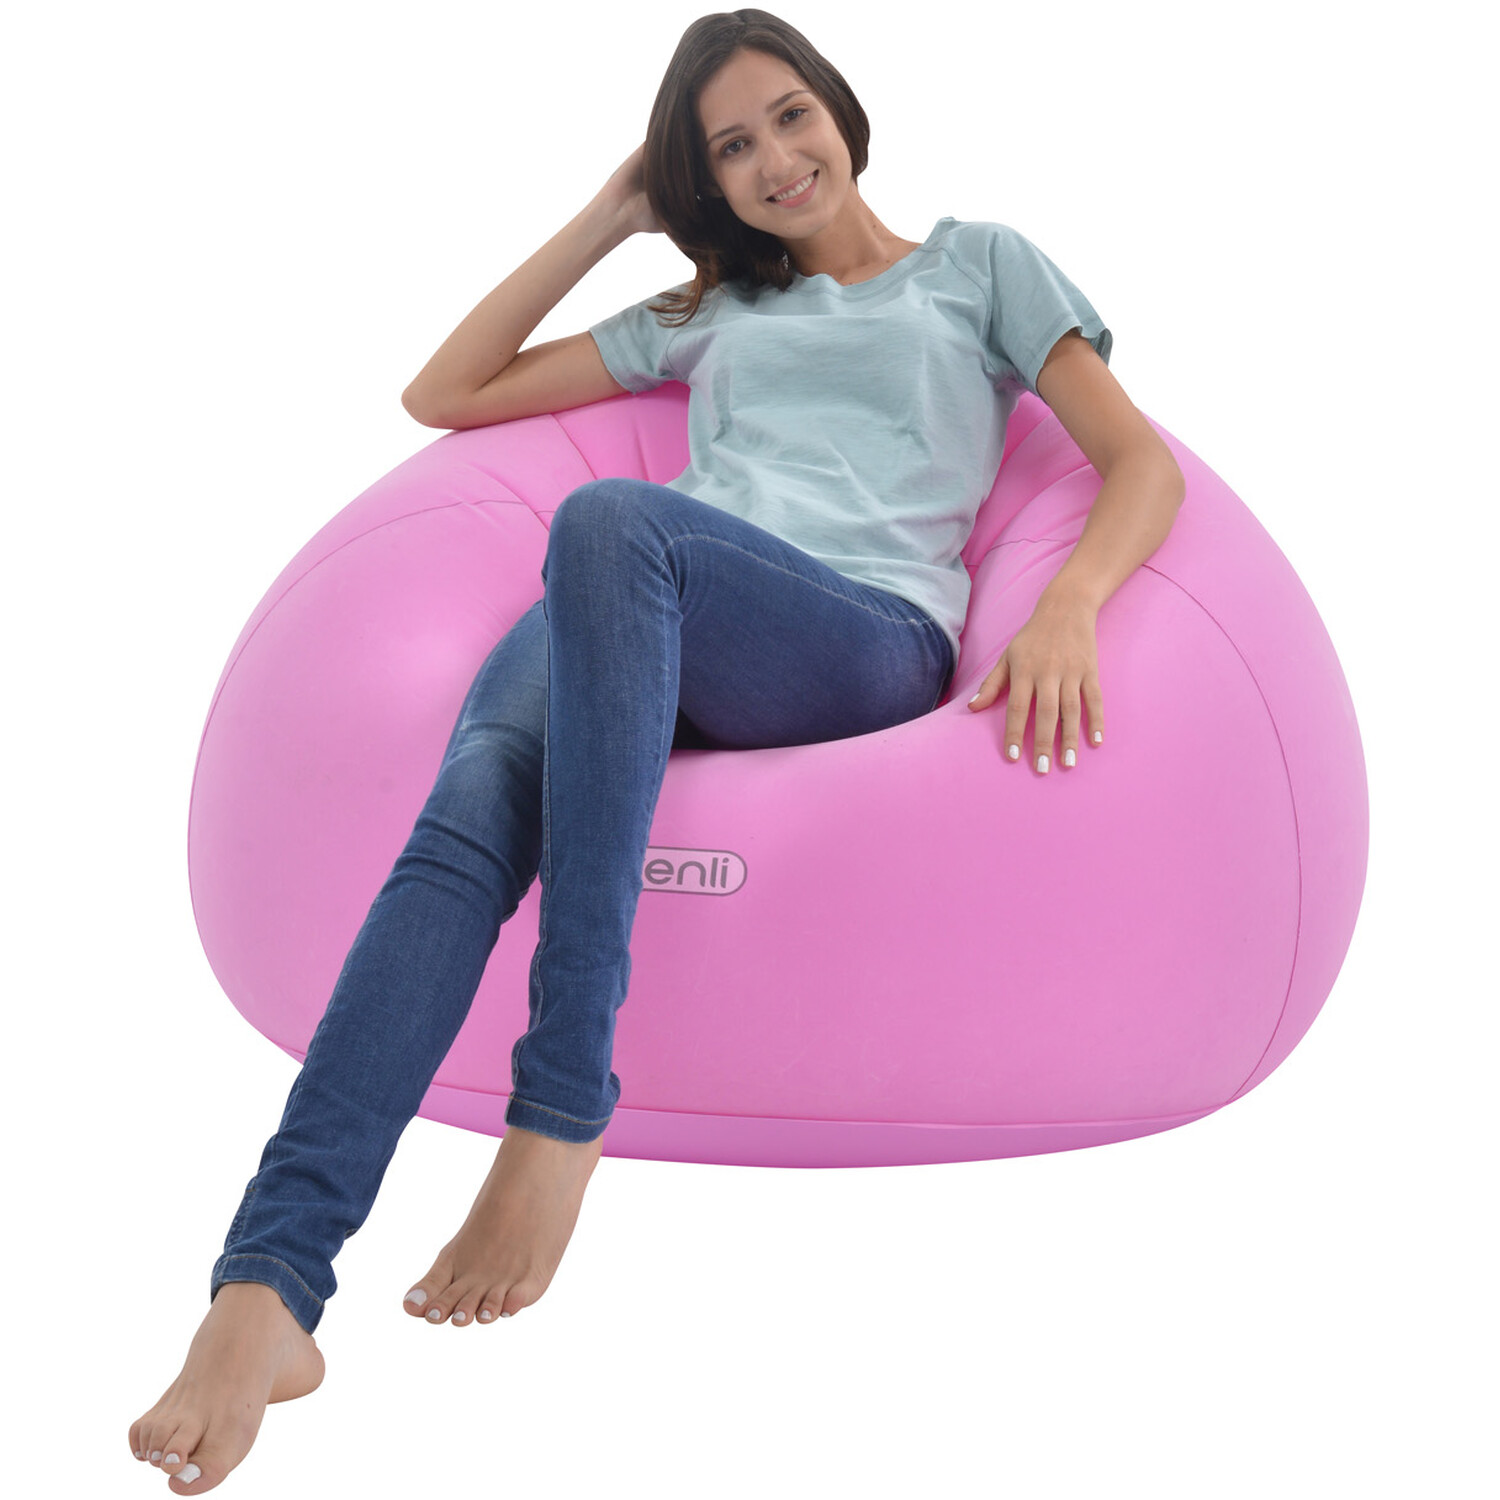 Avenli Inflatable Vinyl Chair Image 2